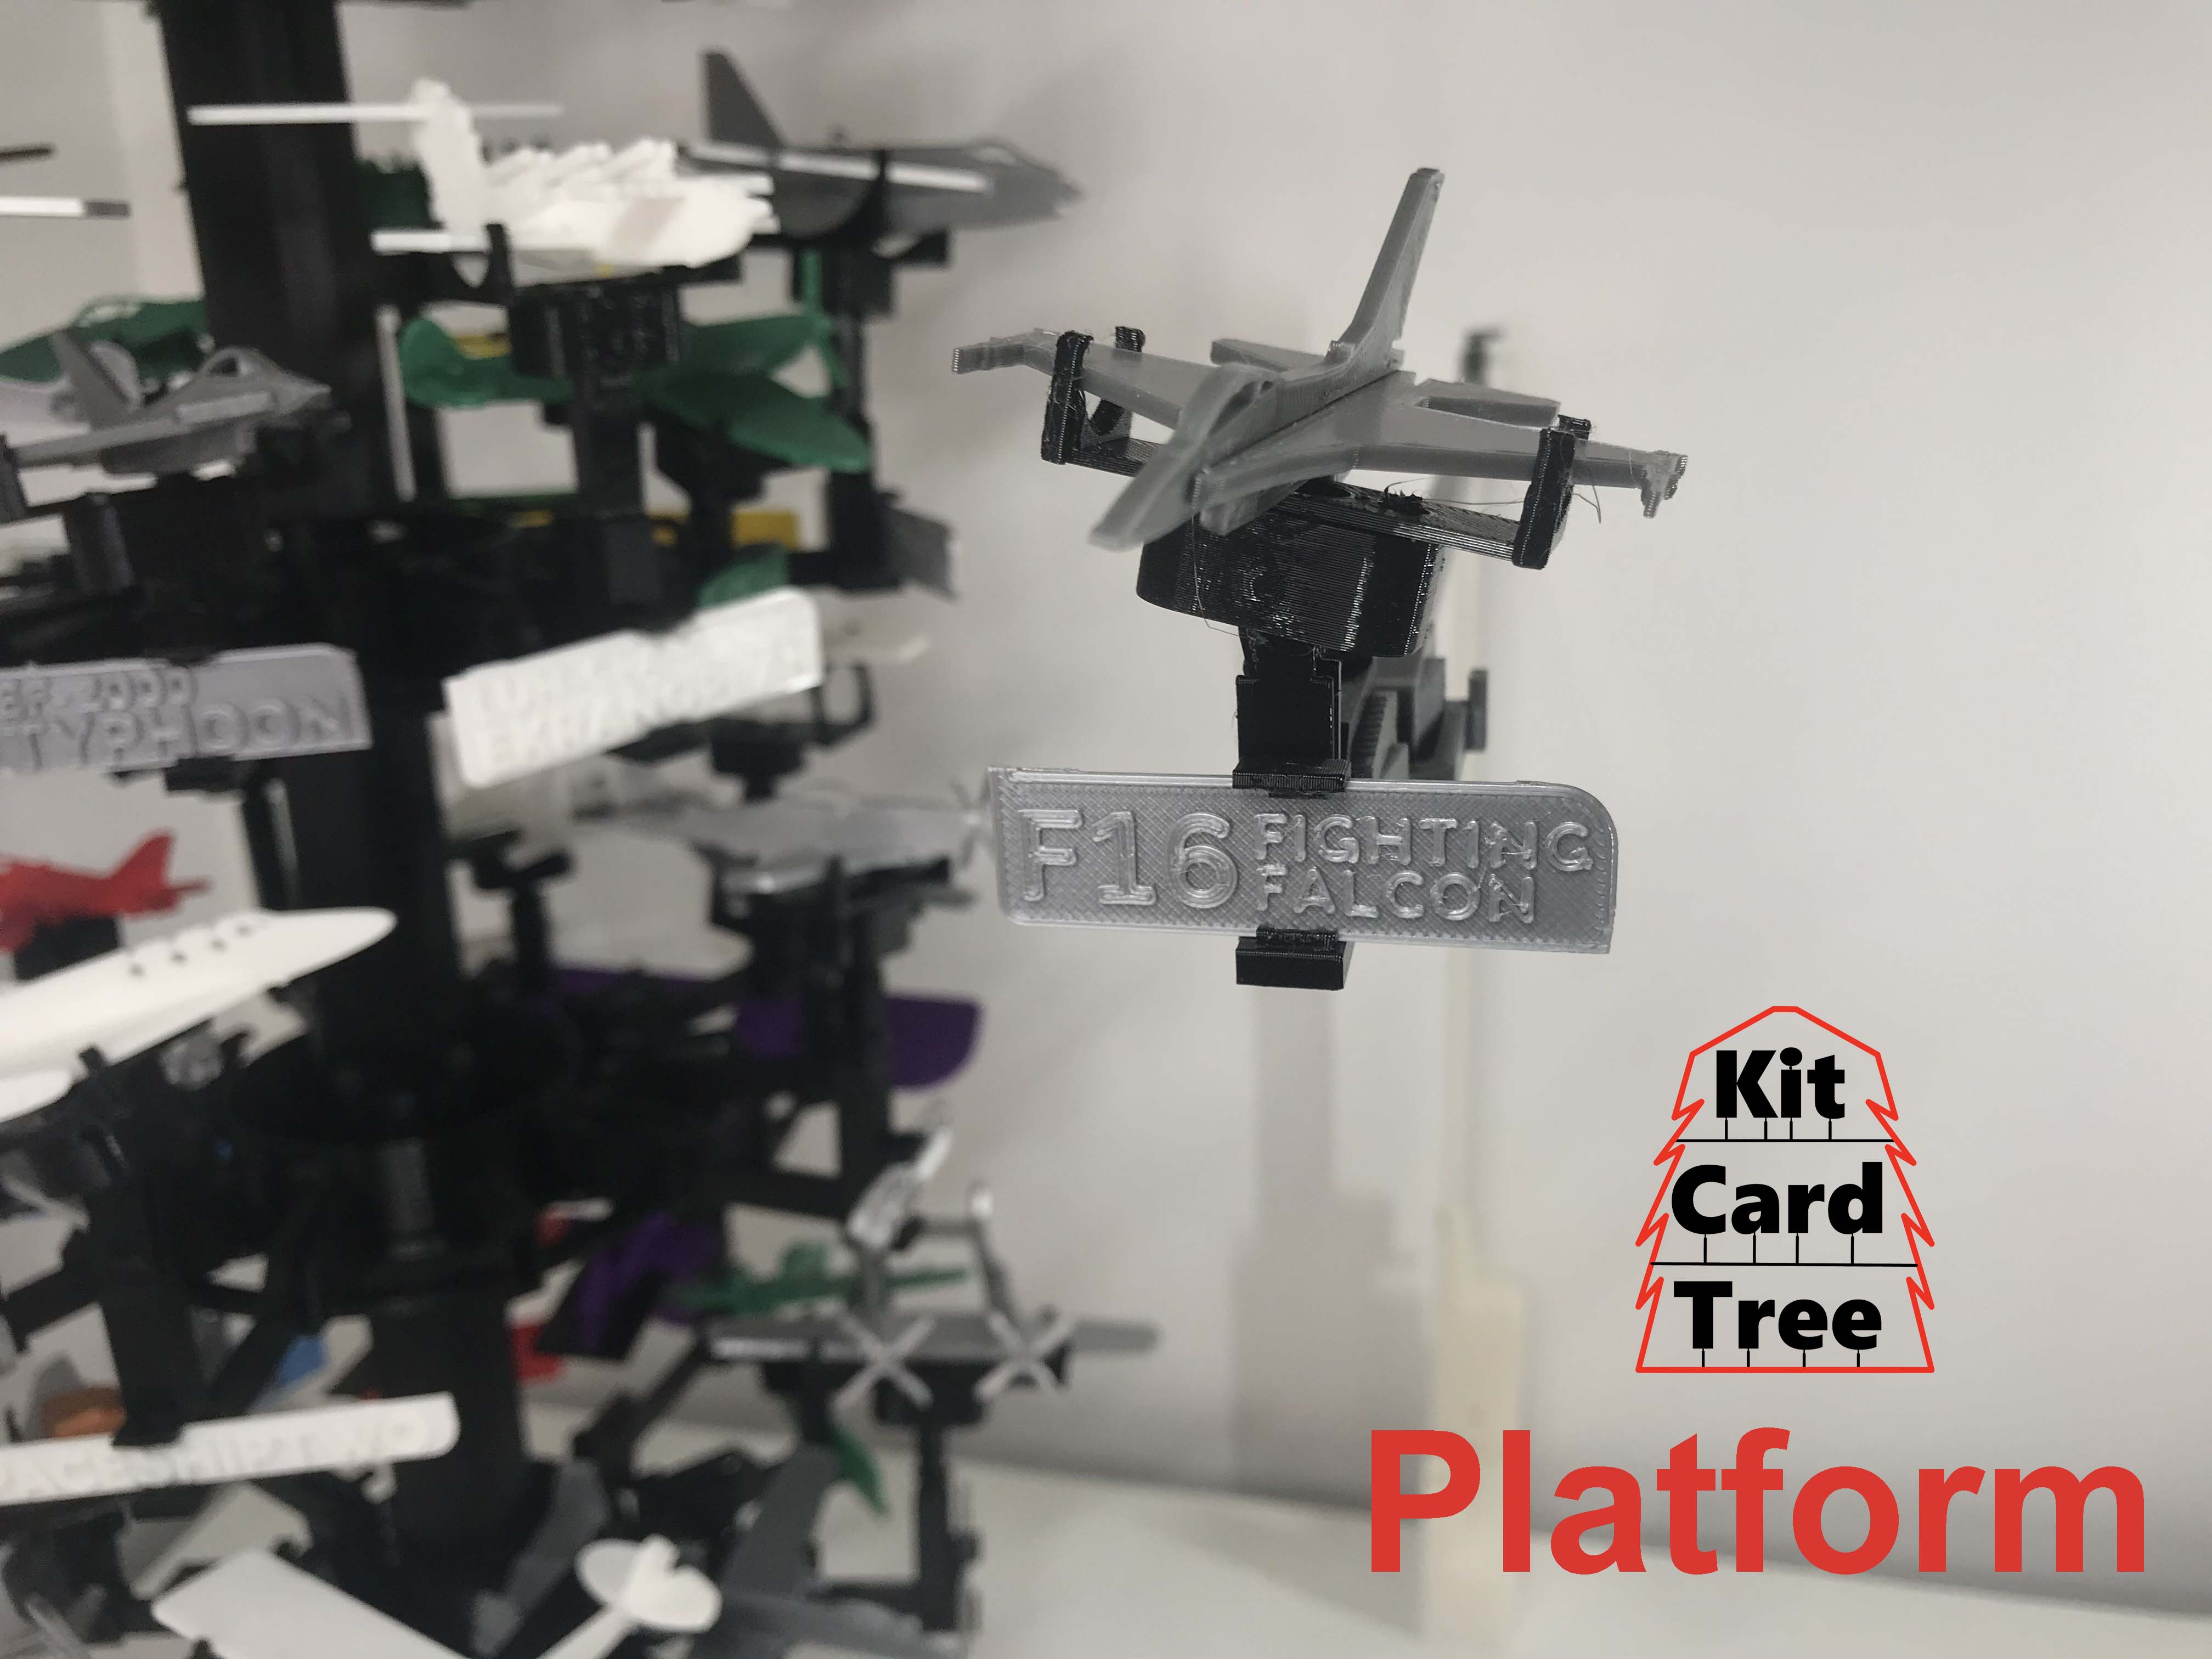 Kit Card Tree platform for F16 Fighting Falcon by Nakozen